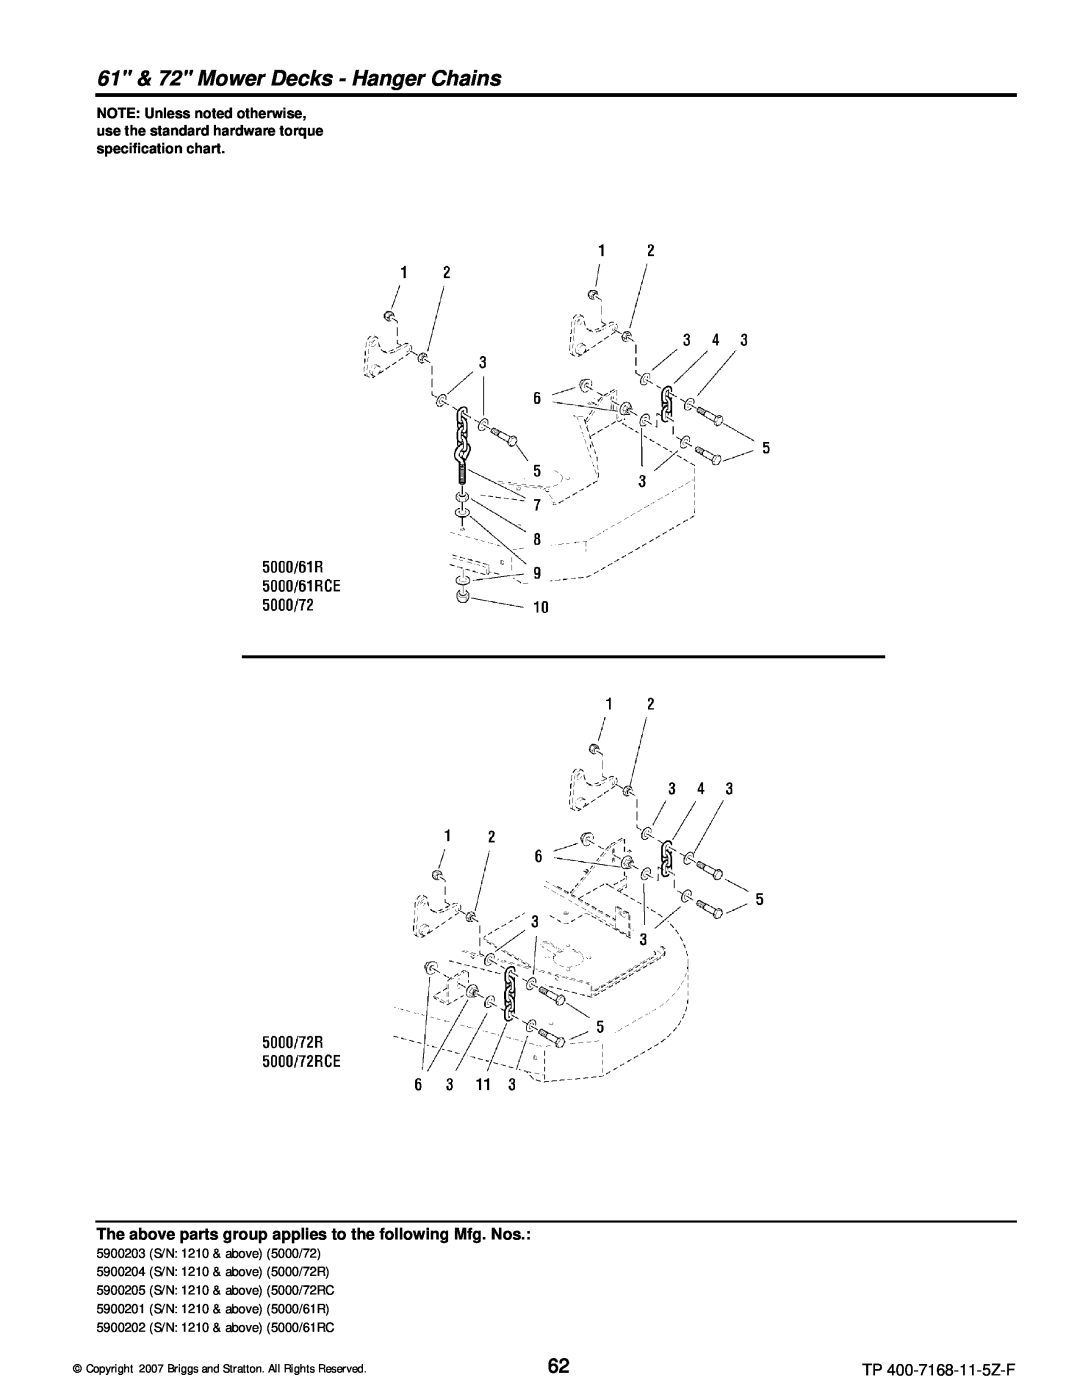 Briggs & Stratton 5900202 manual 61 & 72 Mower Decks - Hanger Chains, 5900203 S/N 1210 & above 5000/72, TP 400-7168-11-5Z-F 